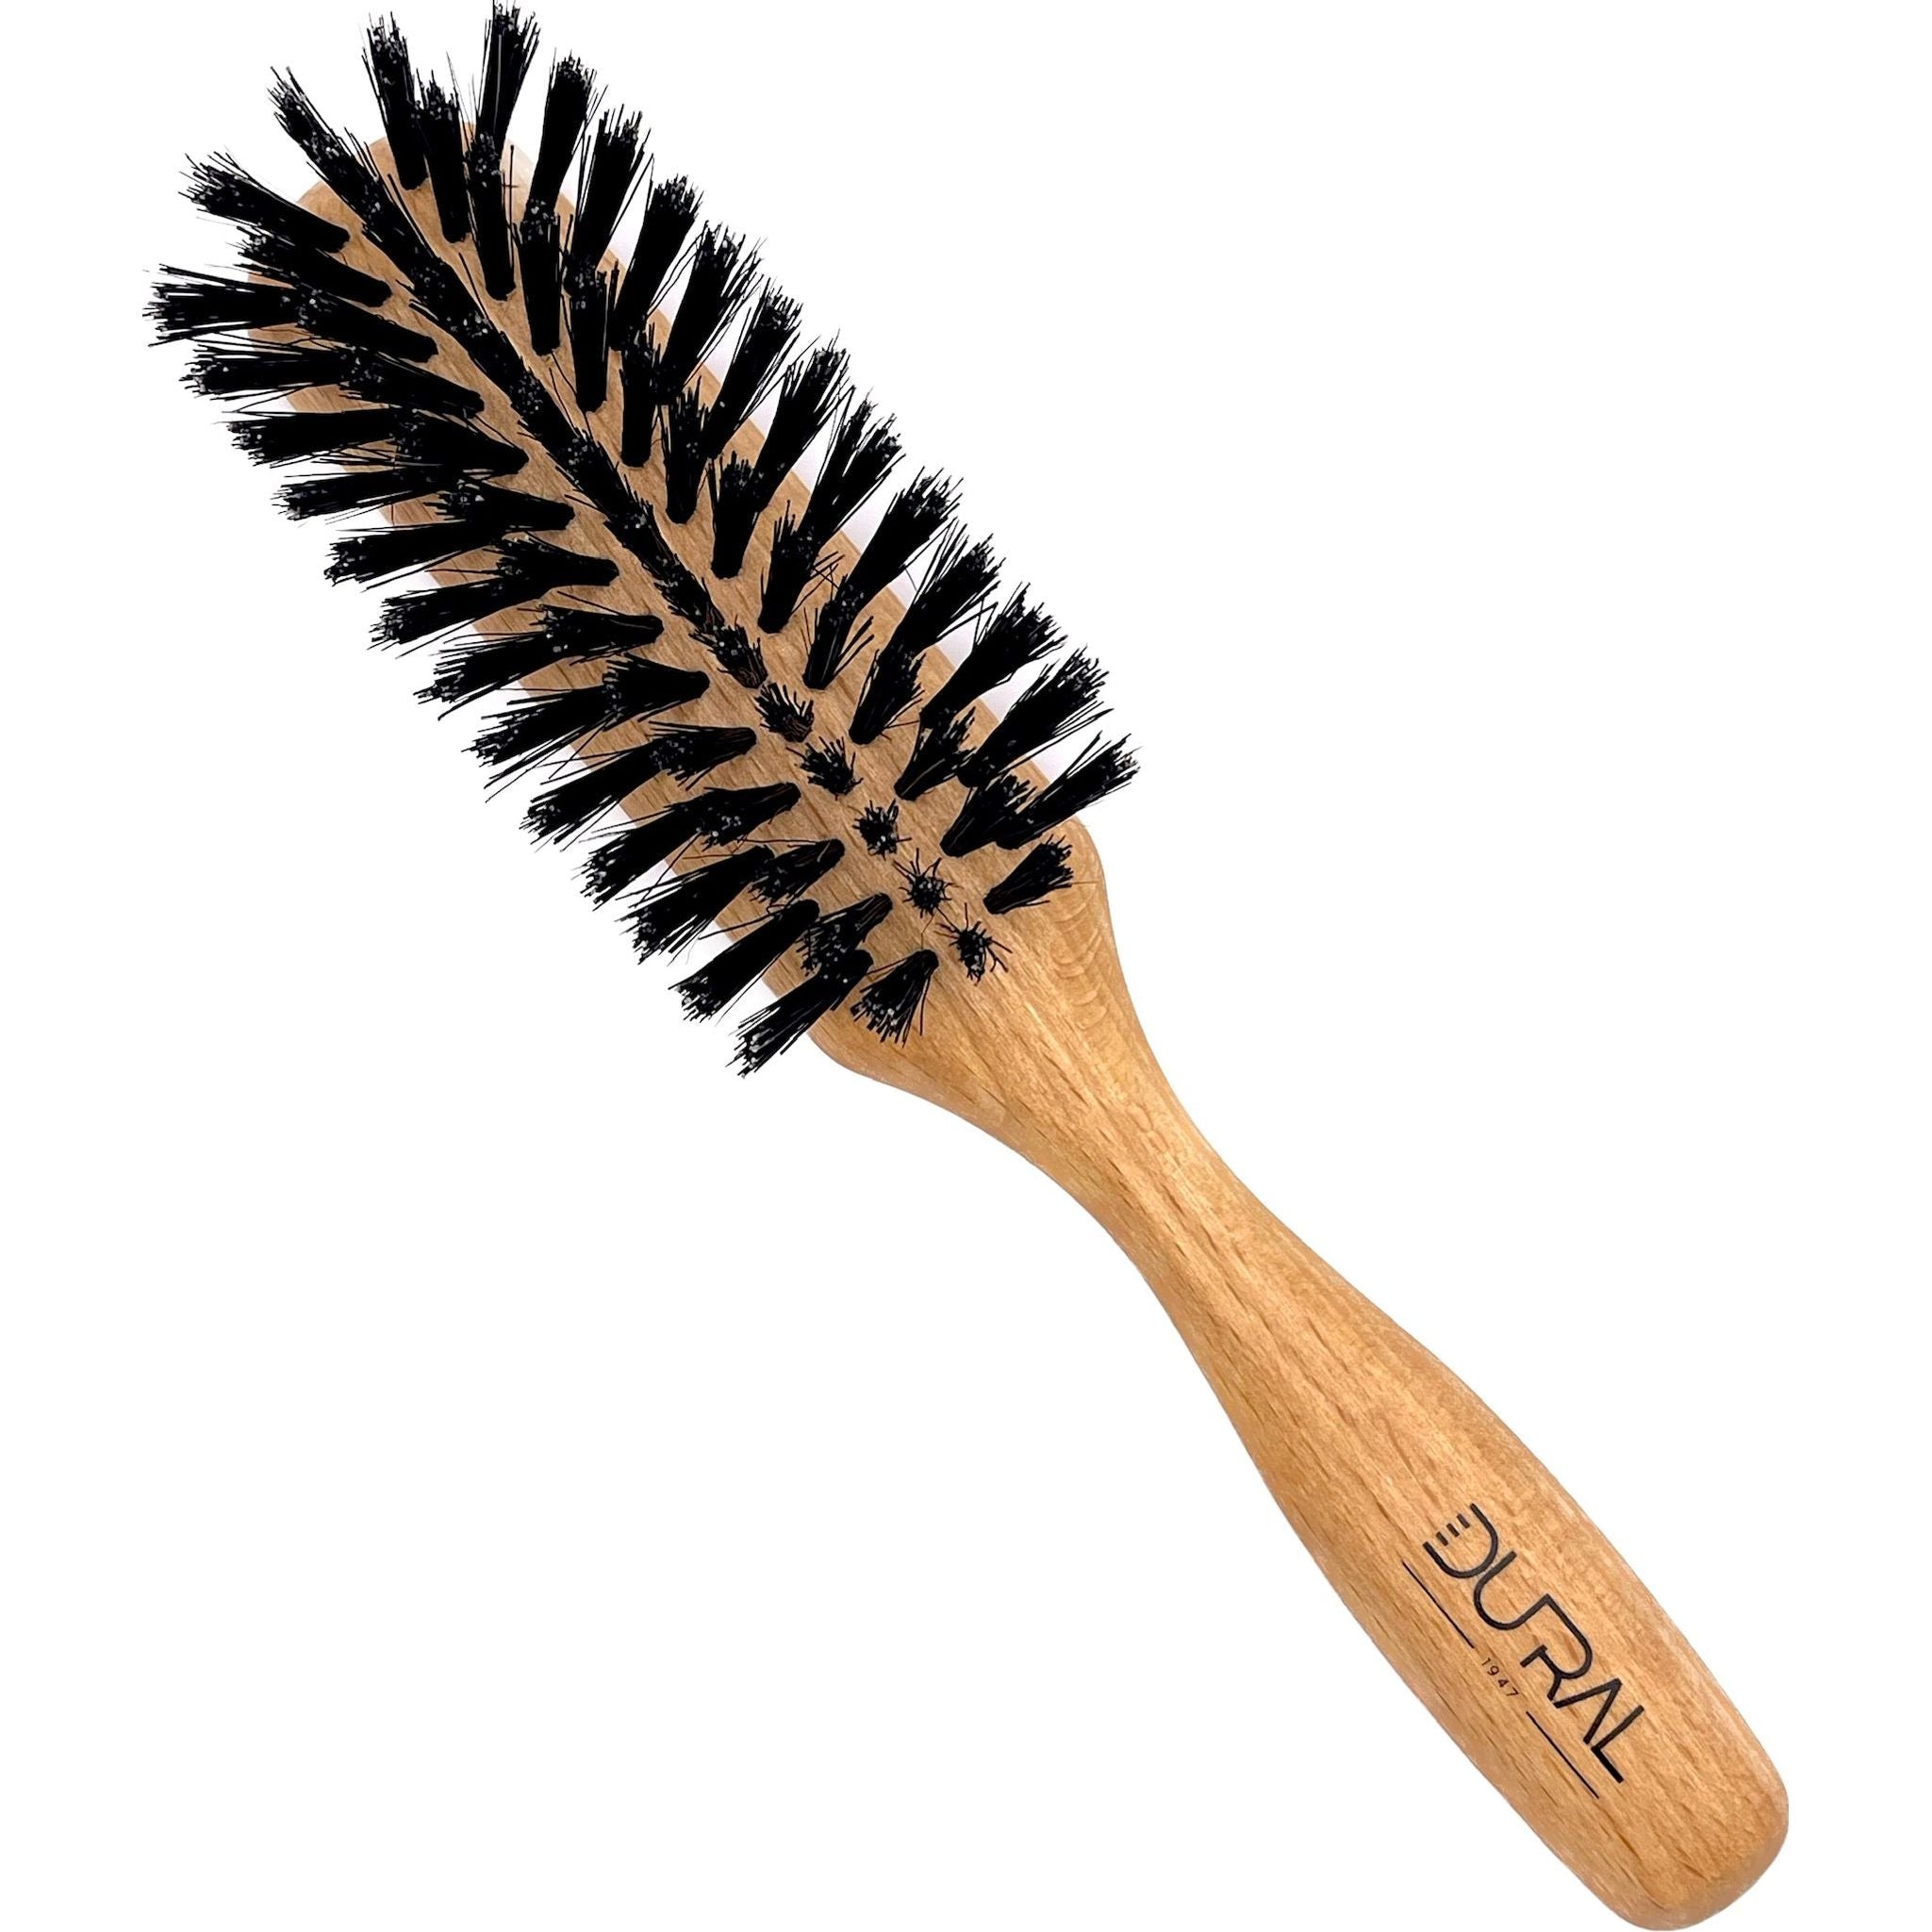 Dural Hair Brush 5 Rows Beech Wood Oiled Wild Boar Bristles